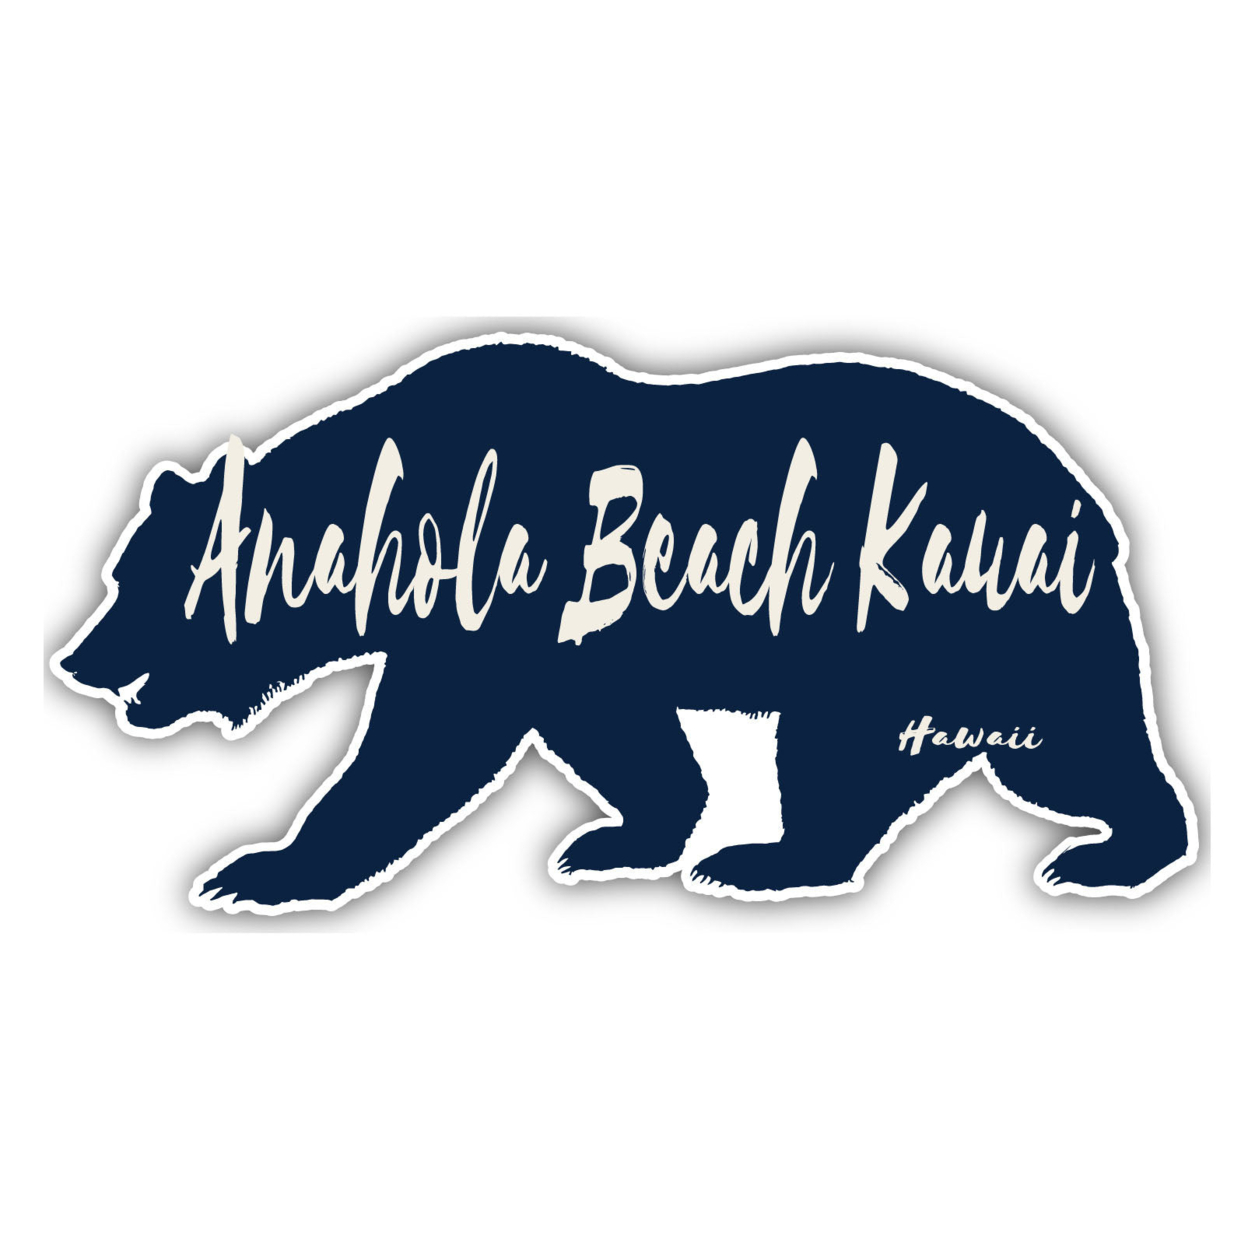 Anahola Beach Kauai Hawaii Souvenir Decorative Stickers (Choose Theme And Size) - Single Unit, 4-Inch, Bear